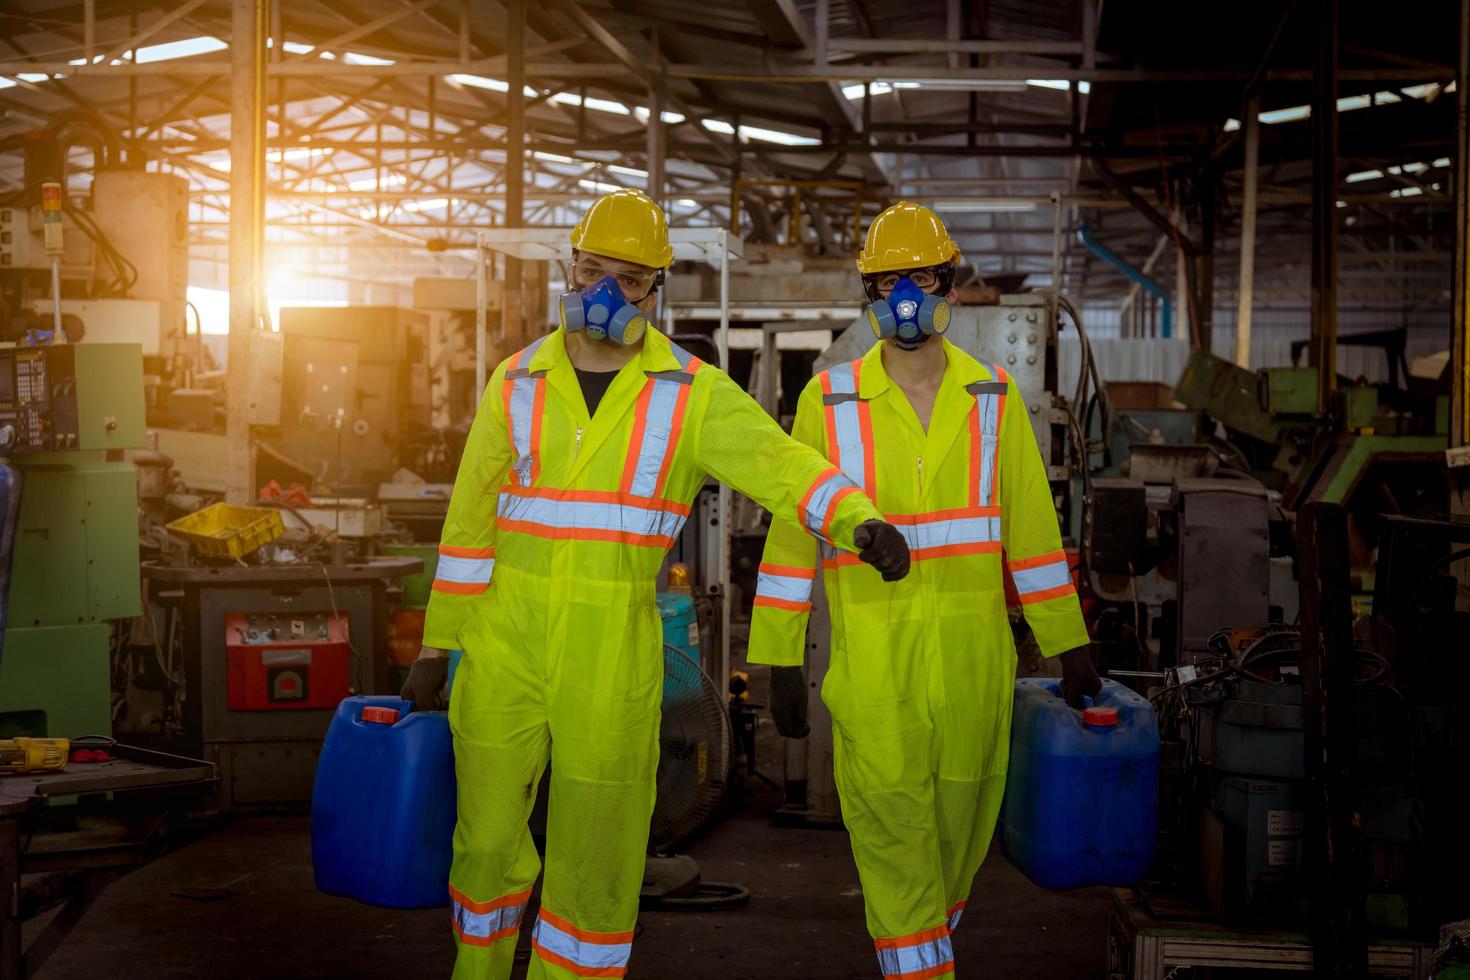 industrie engineering en teamwork dragen veiligheid uniforme controle werkende draaibank slijpmachine werken in industrie fabriek. foto